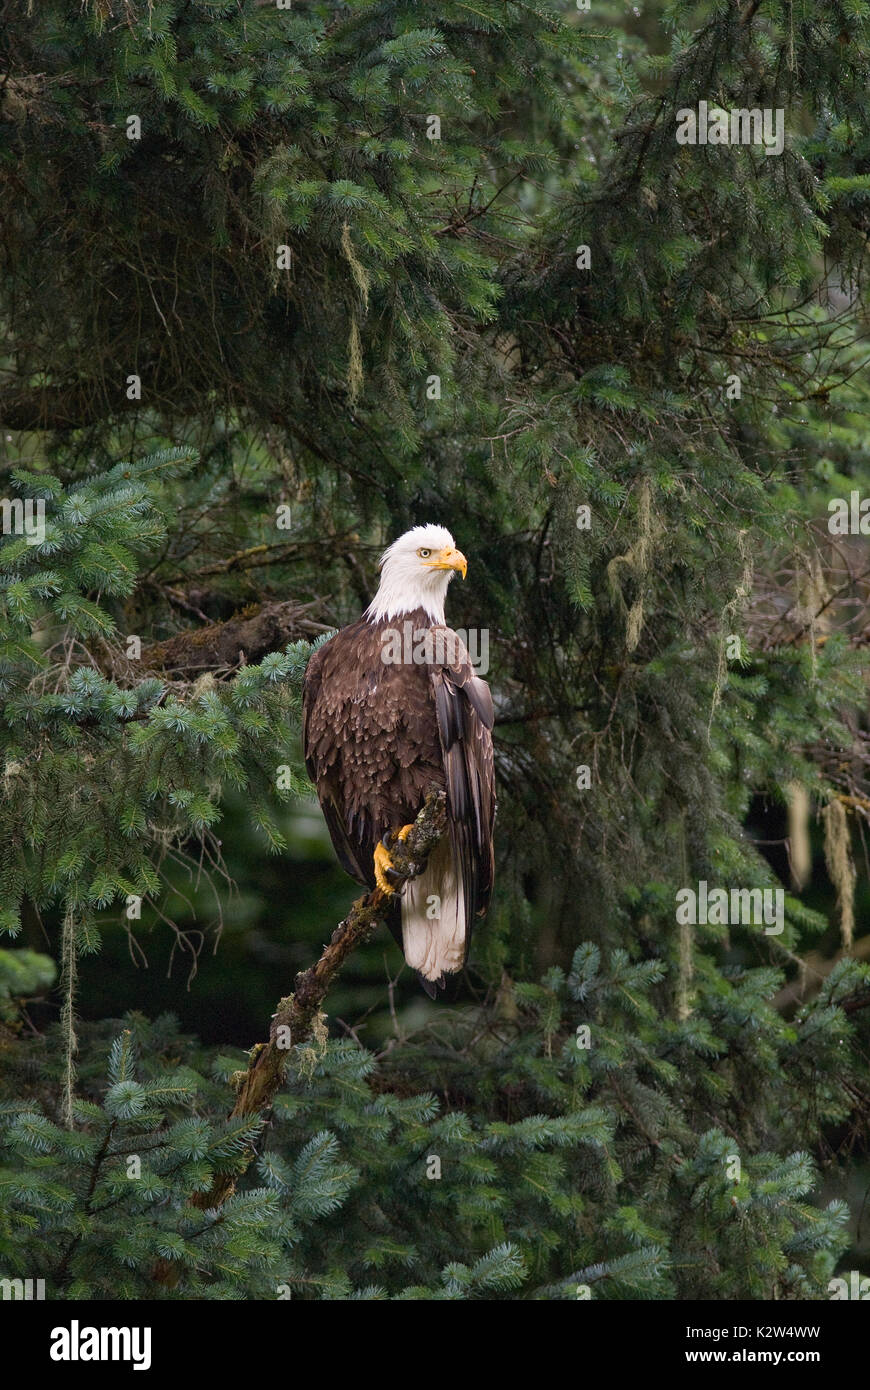 Bald eagle (Haliaeetus leucocephalus) on a tree, Tongass National Forest, Alaska, USA, North America Stock Photo